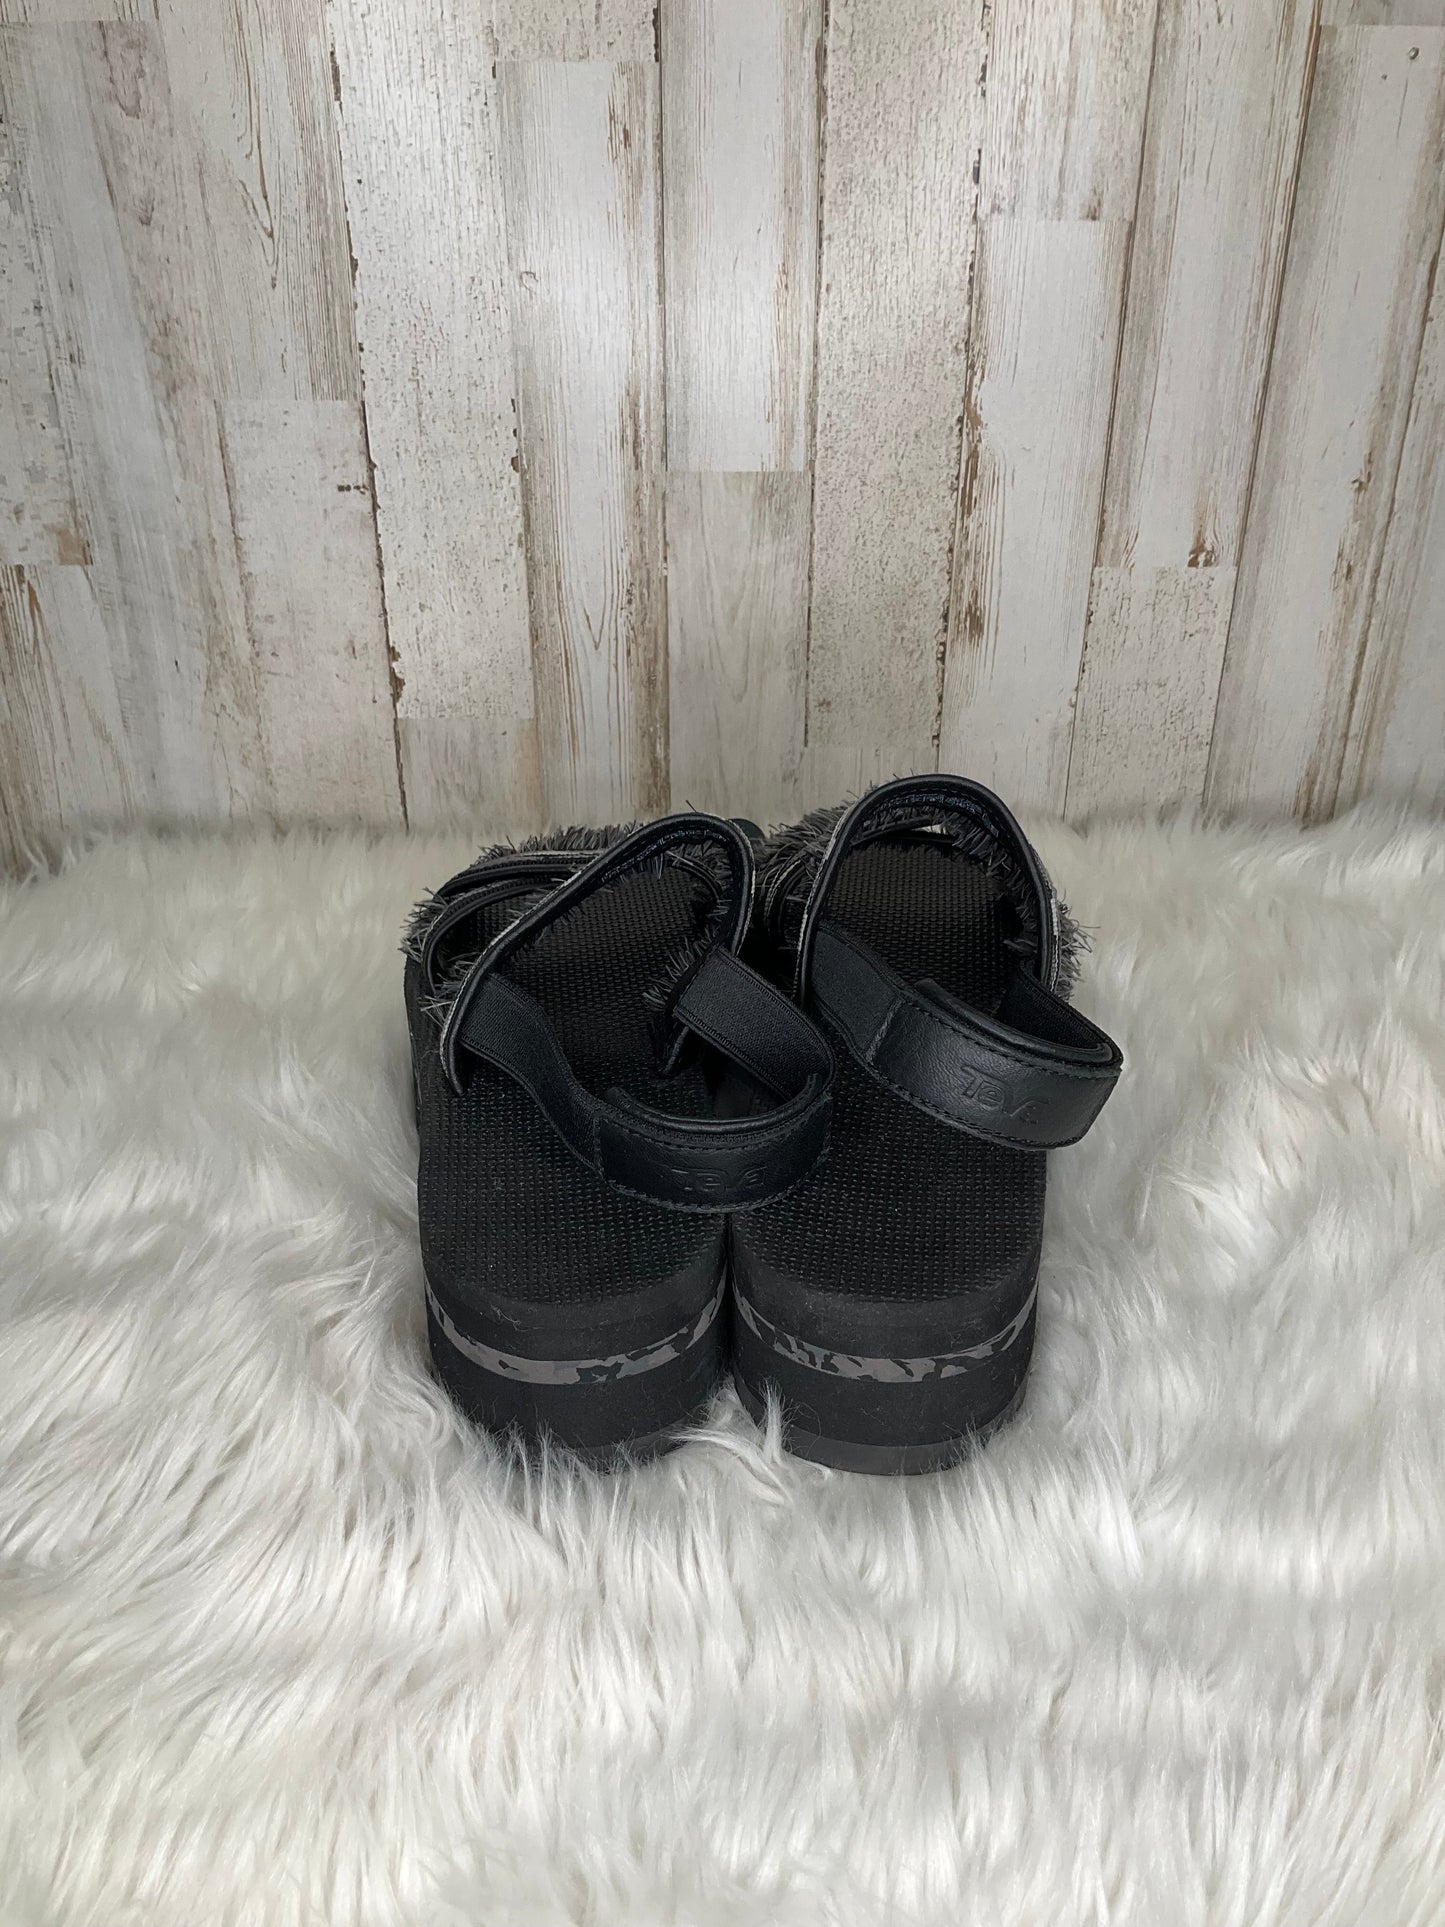 Black Sandals Sport Teva, Size 8